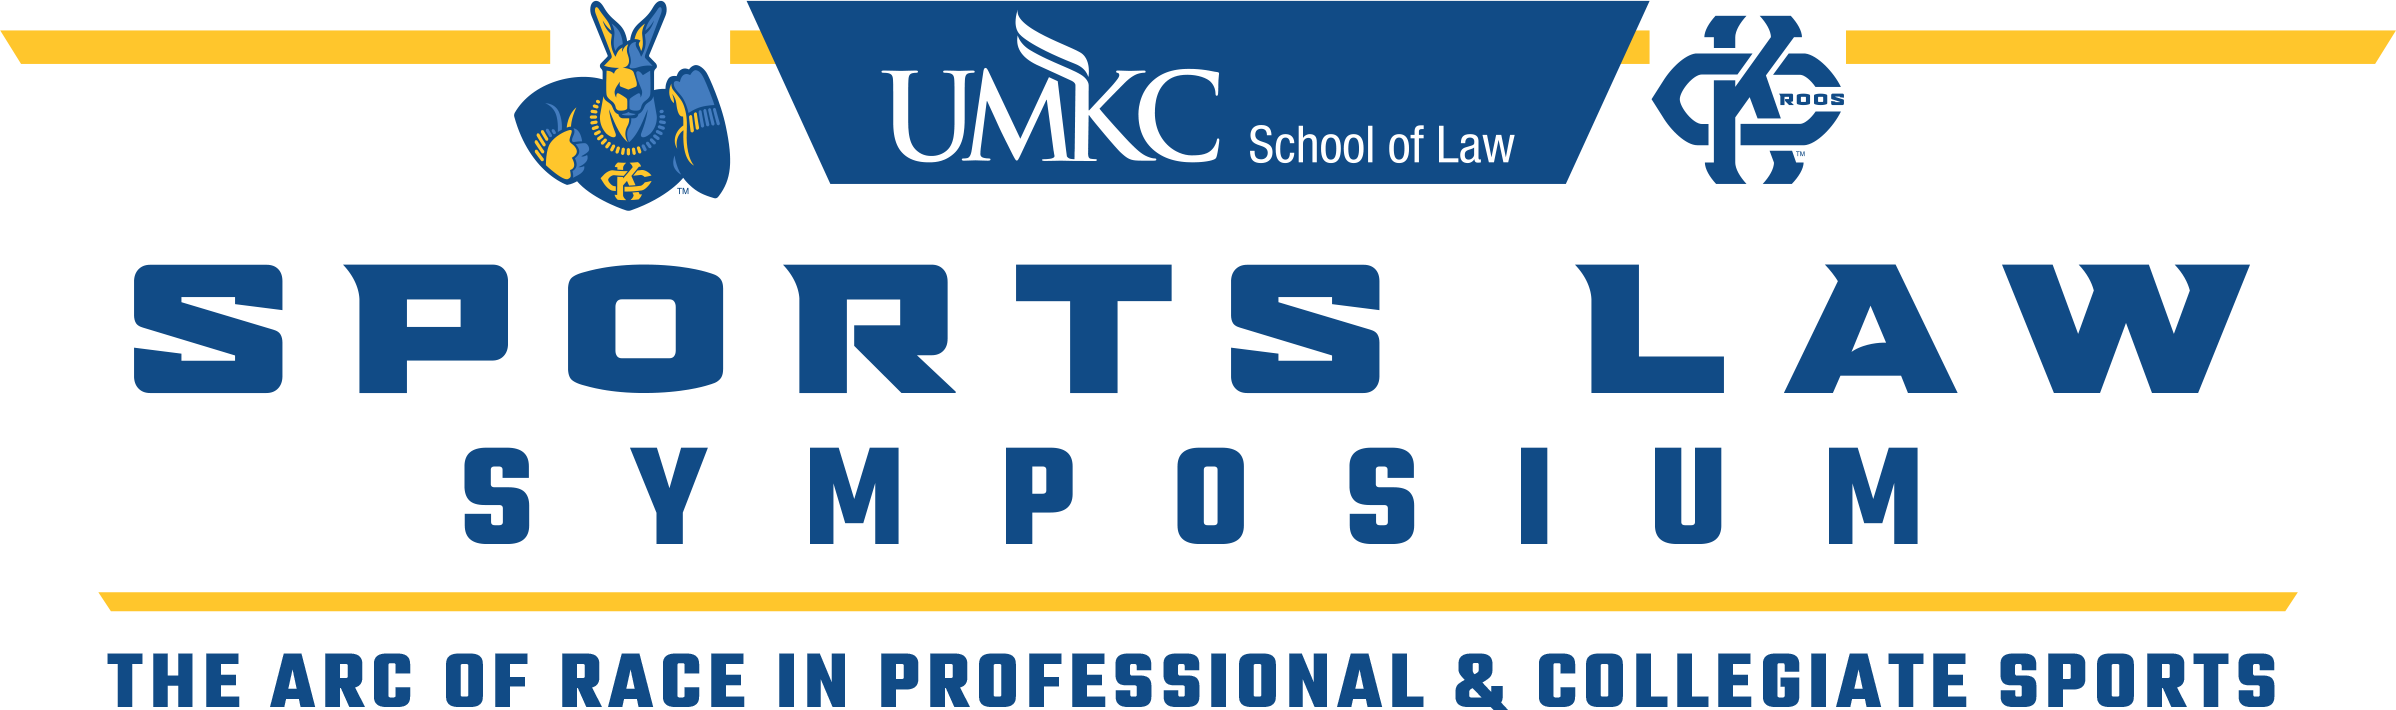 Sports Law Symposium